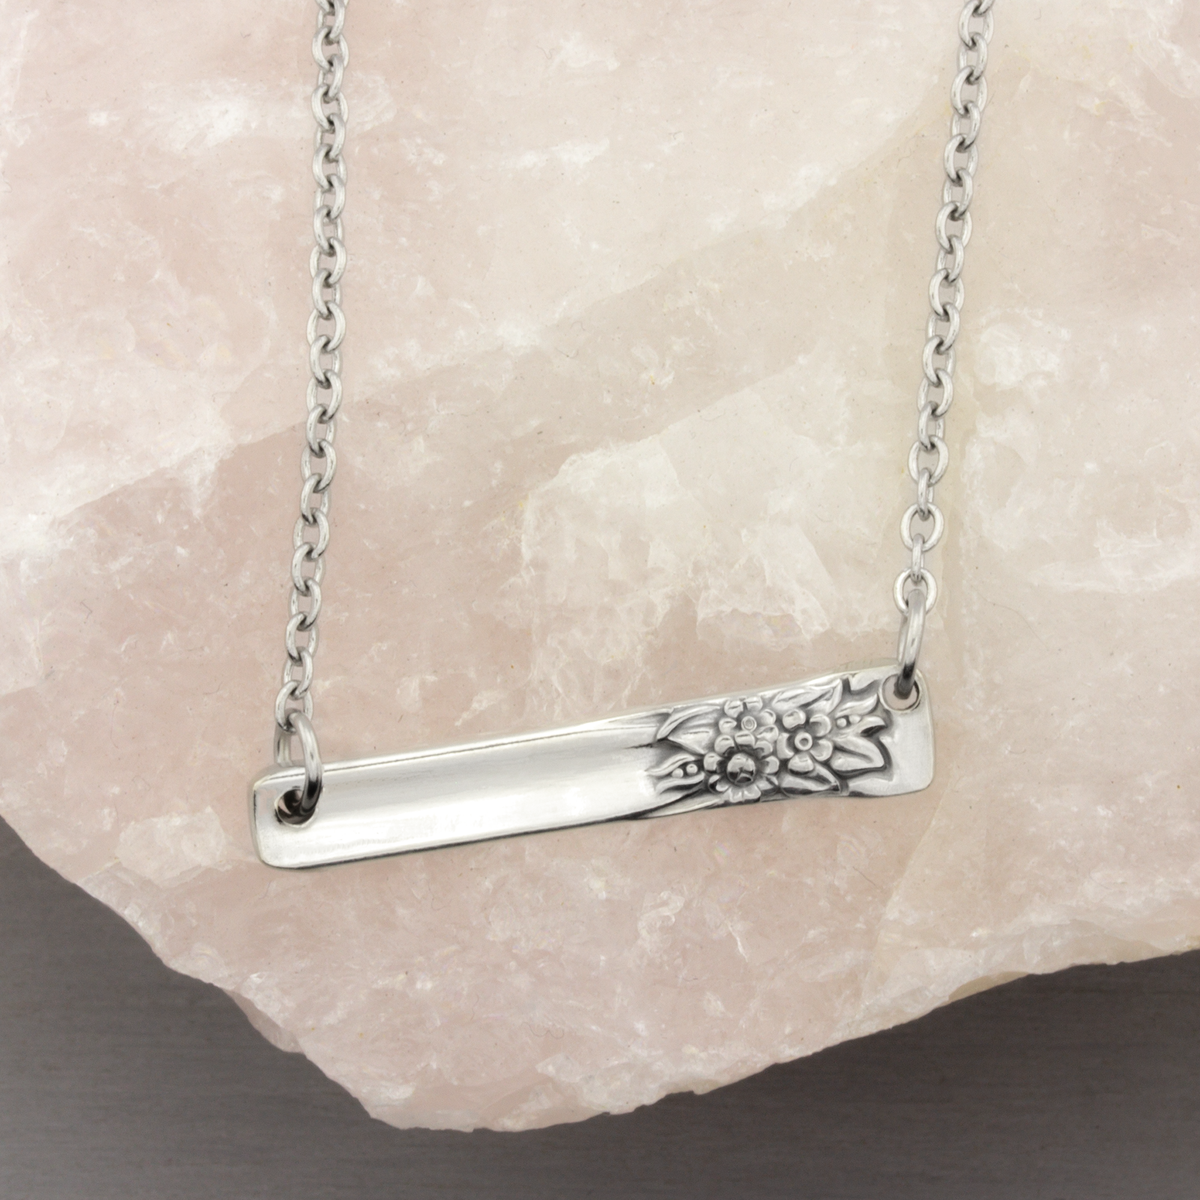 Spoon Necklace Pendant April Silverware Jewelry